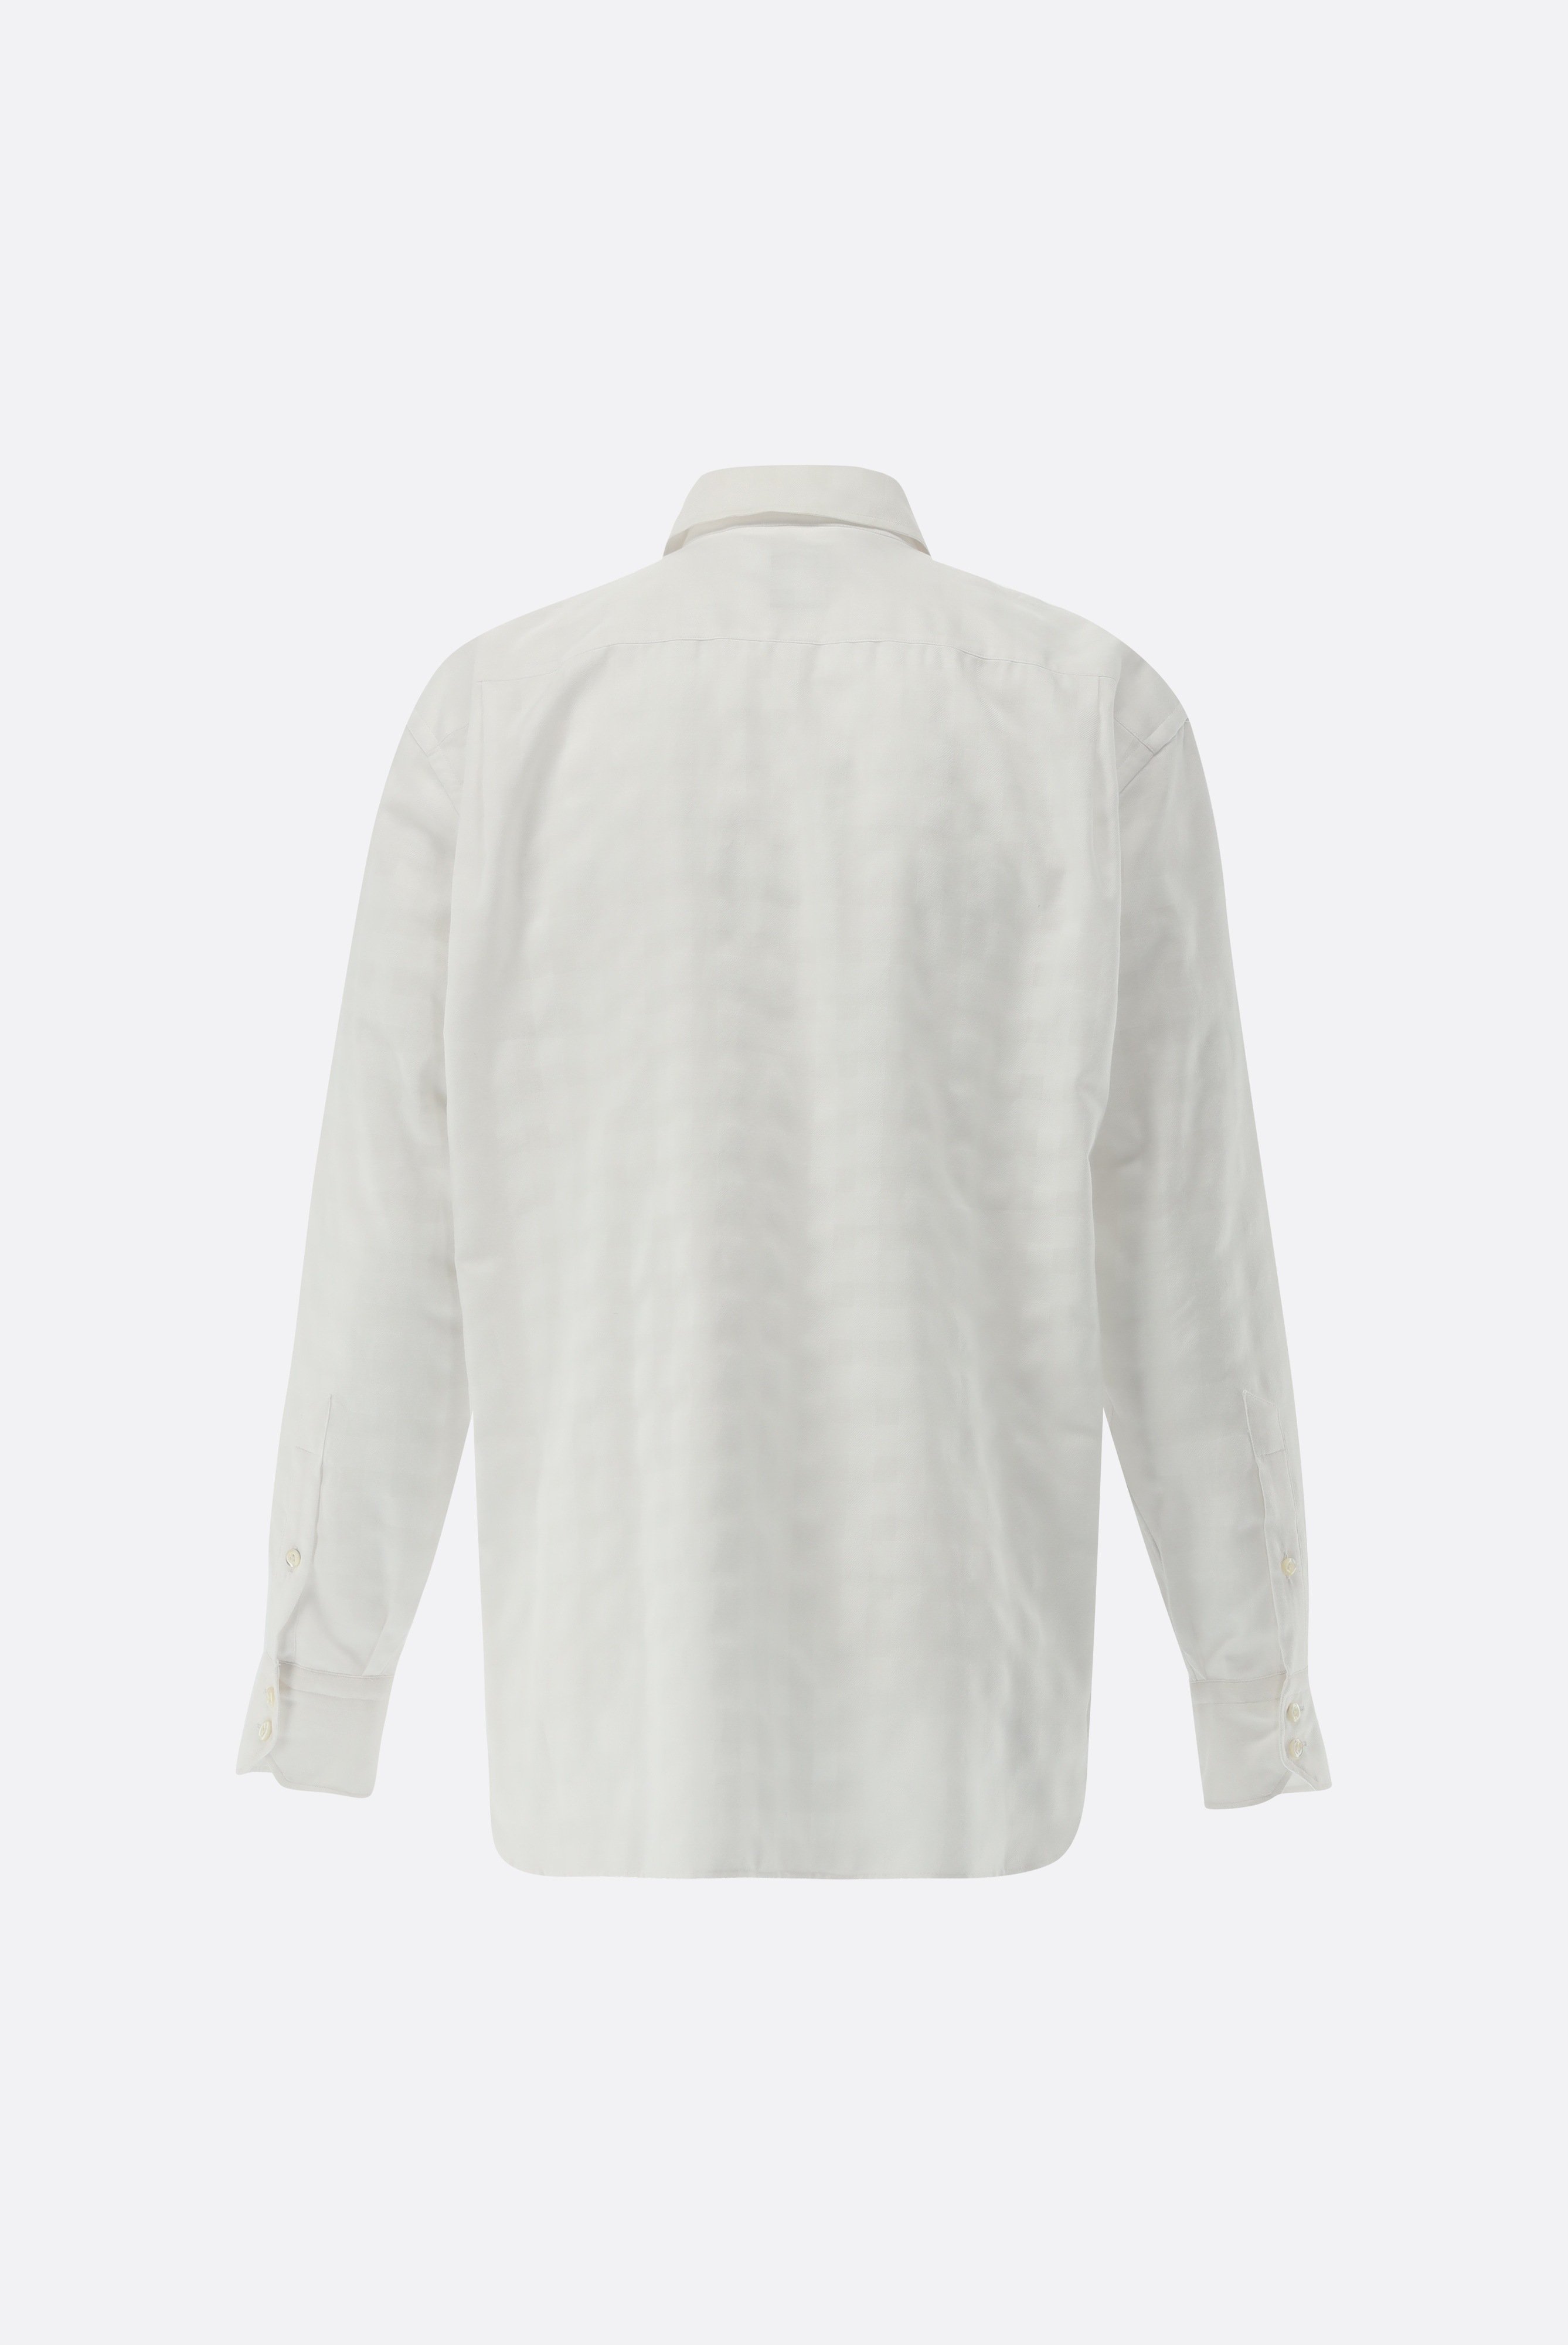 Casual Shirts+Checked twill shirt Comfort Fit+20.2021.AV.151021.000.39